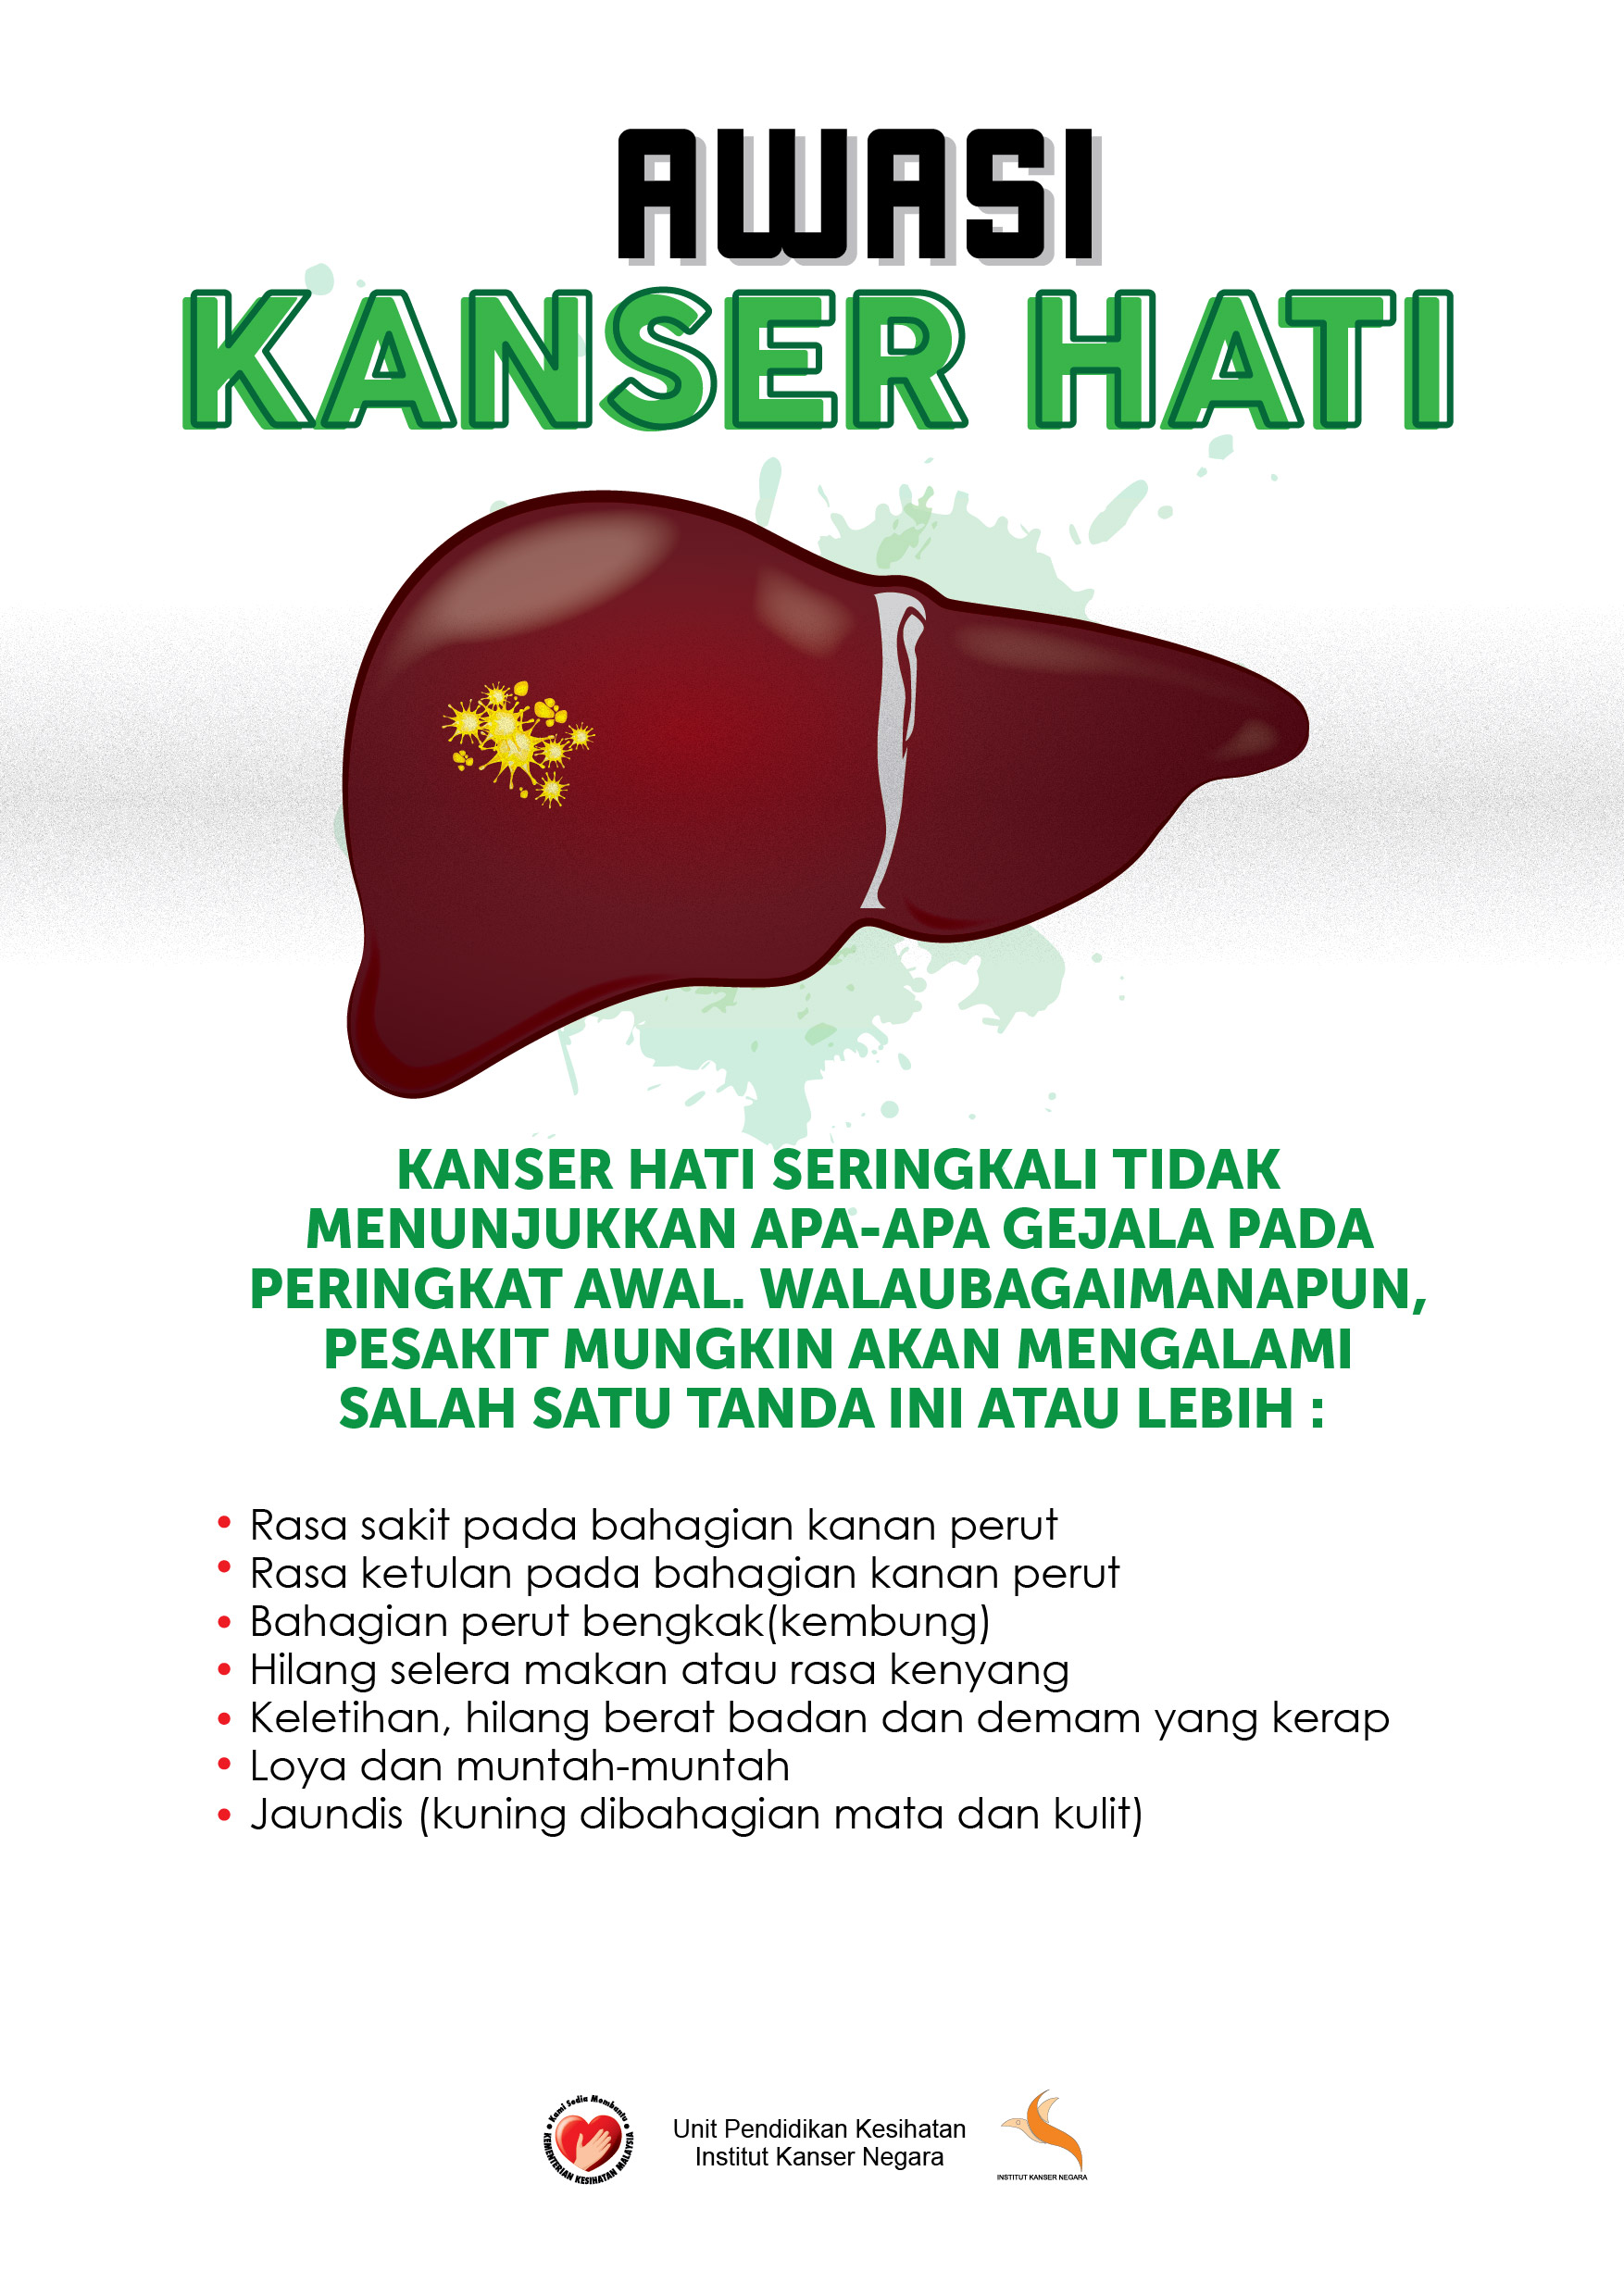 #hepatita hashtag on Instagram - stories, photos and videos - Simptom kanser hati